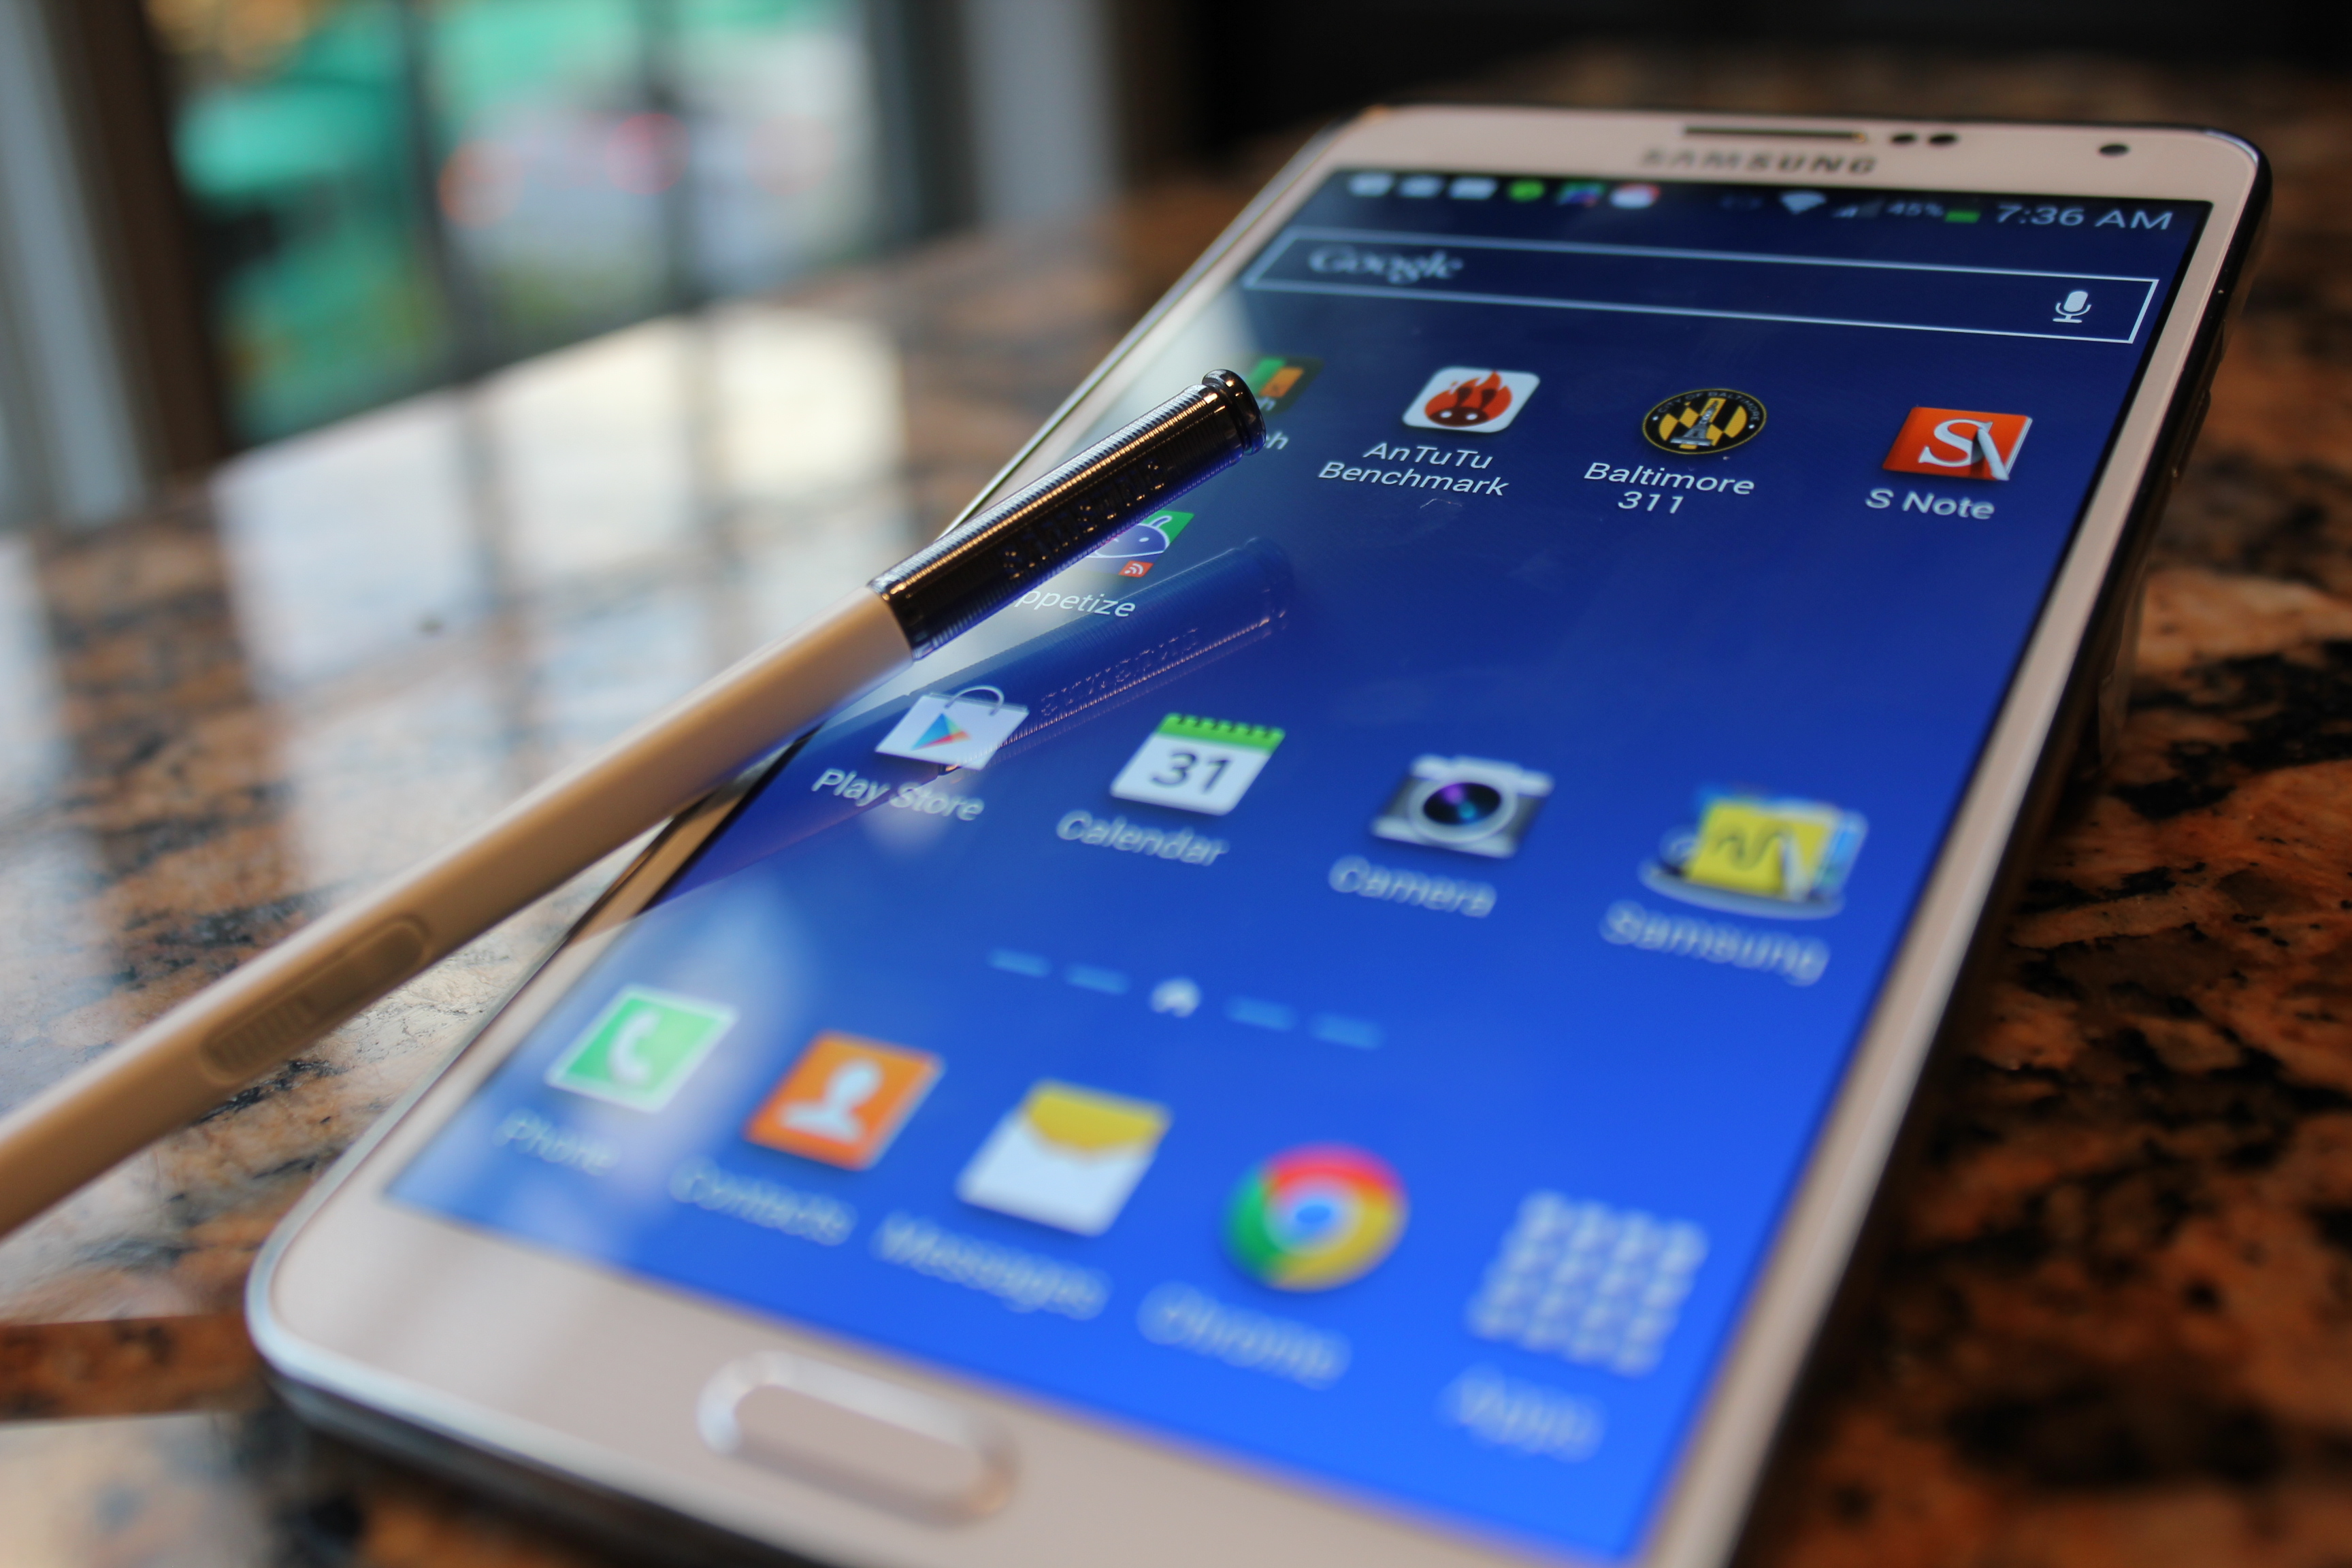 Галакси нот 4. Самсунг Galaxy Note 3. Samsung Galaxy s4 Note. Самсунг галакси нот 4. Samsung Galaxy Note 2013.